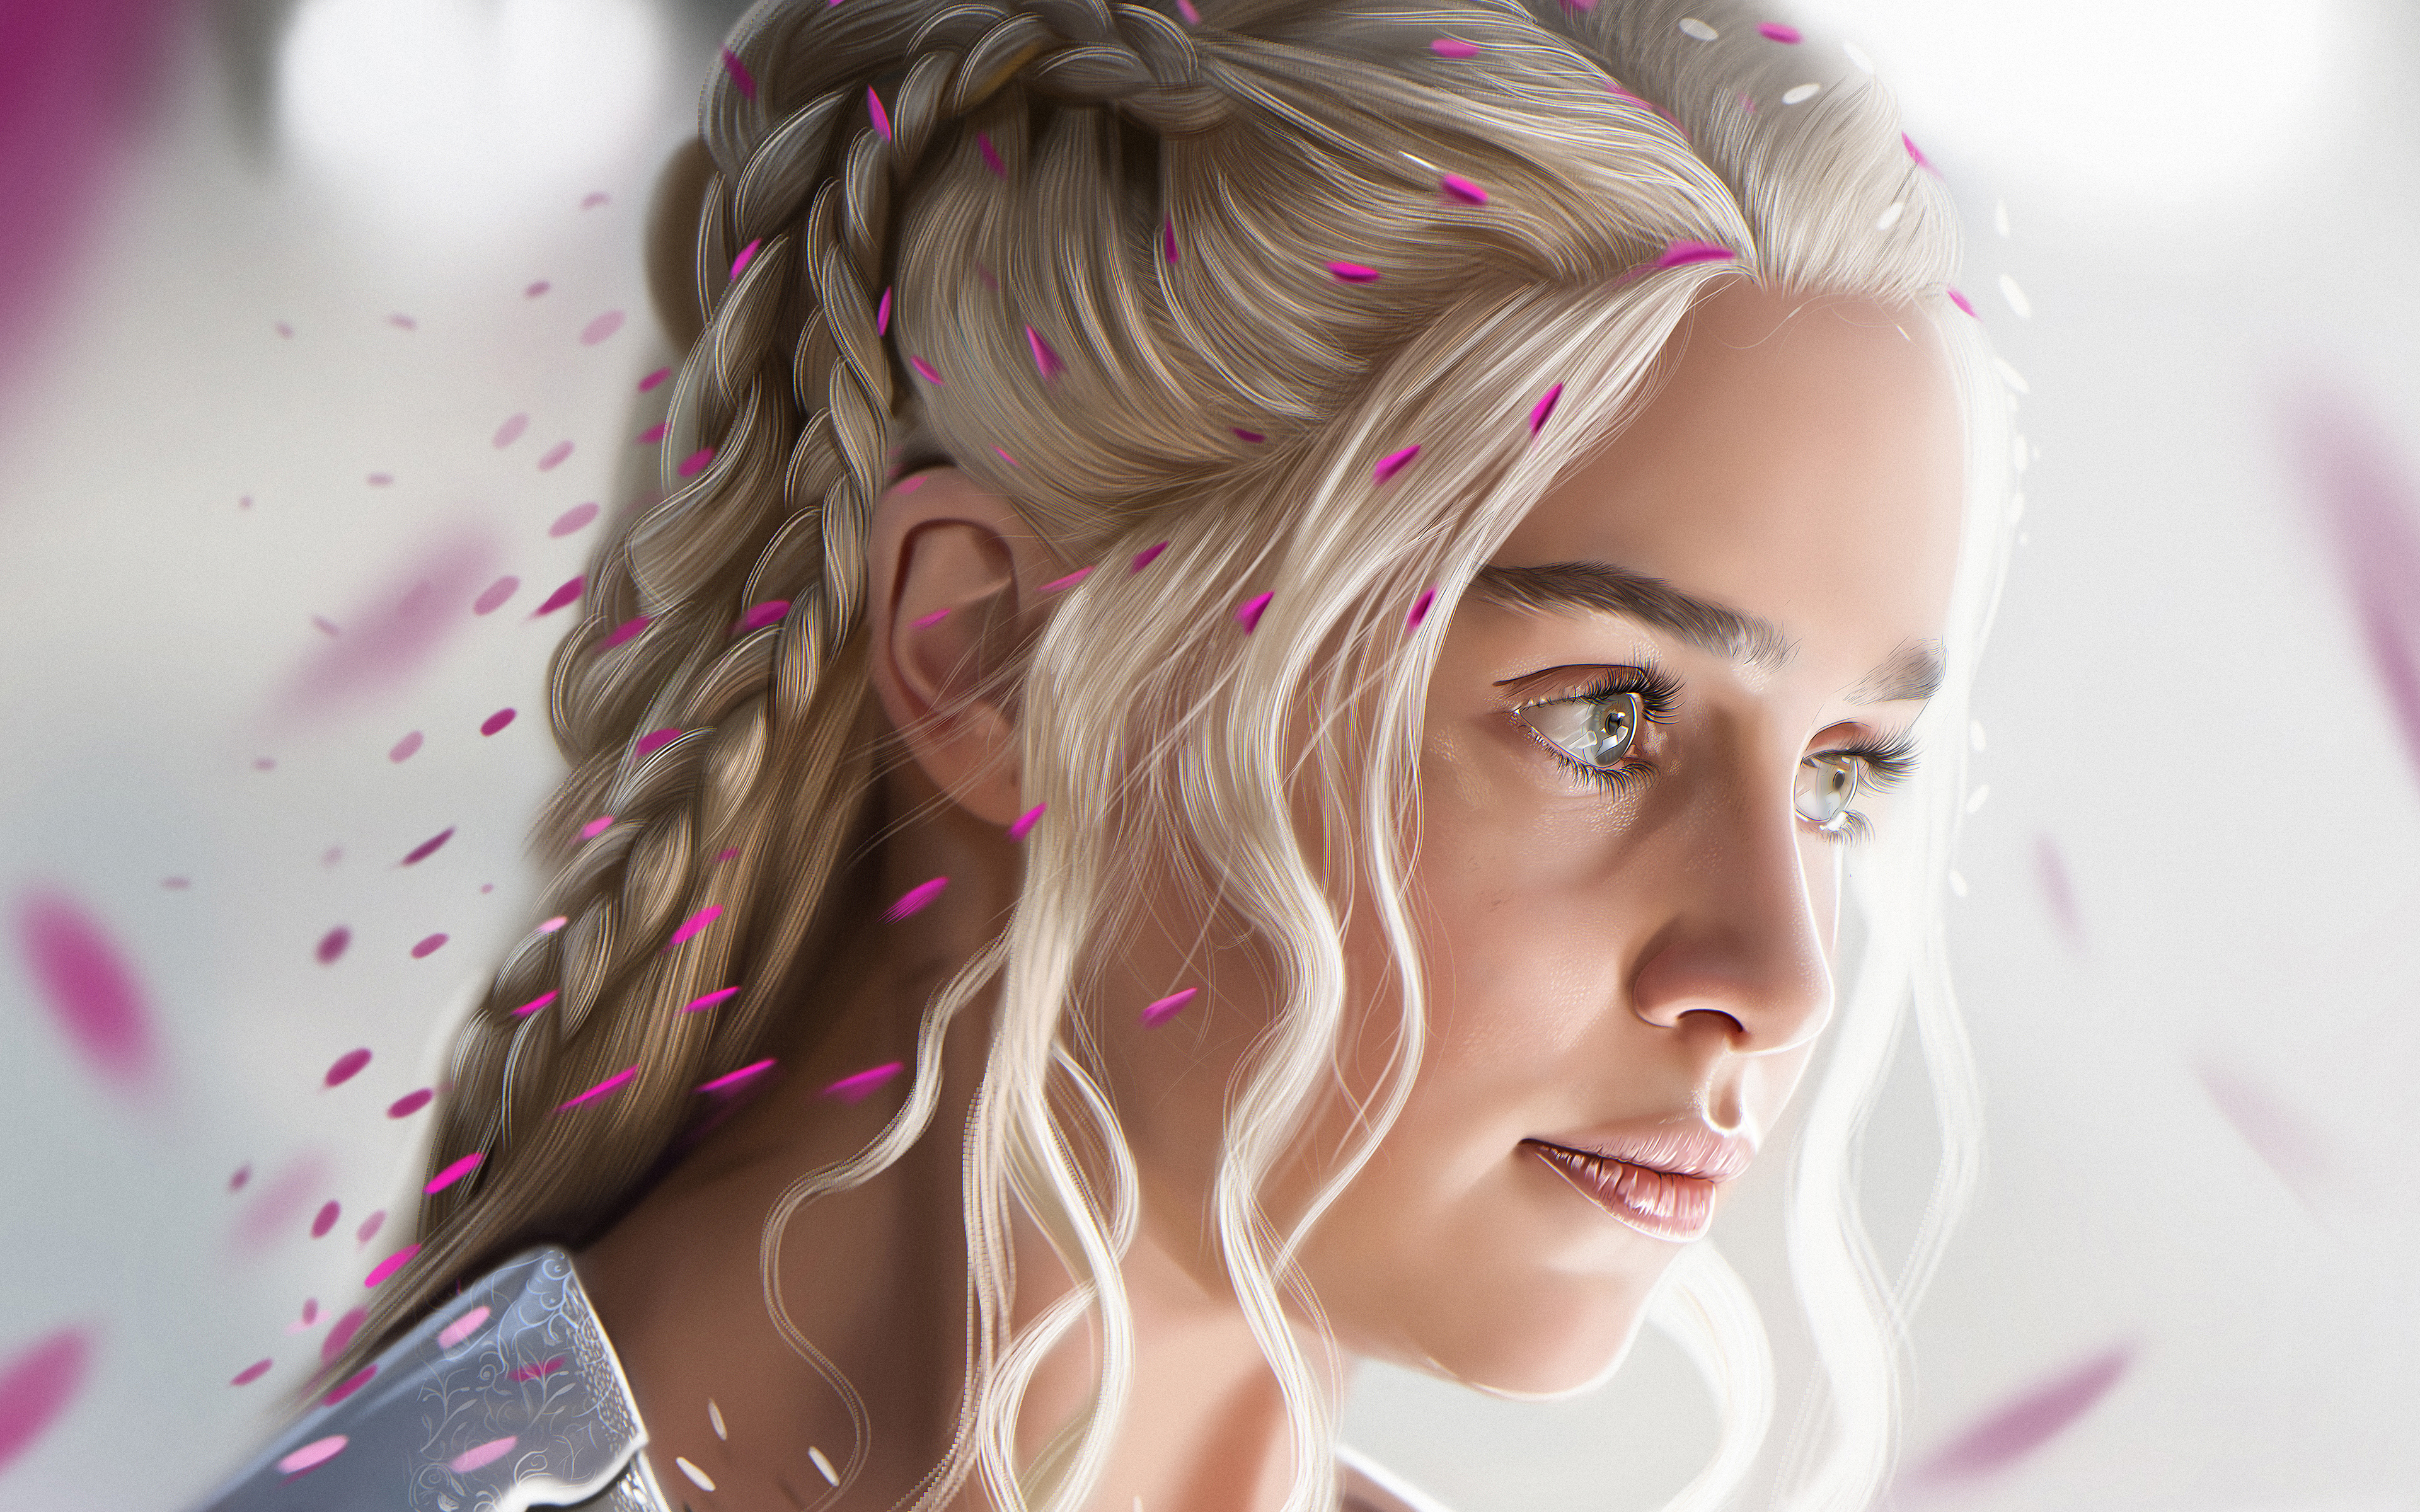 General 3840x2400 Daenerys Targaryen Game of Thrones digital art Emilia Clarke